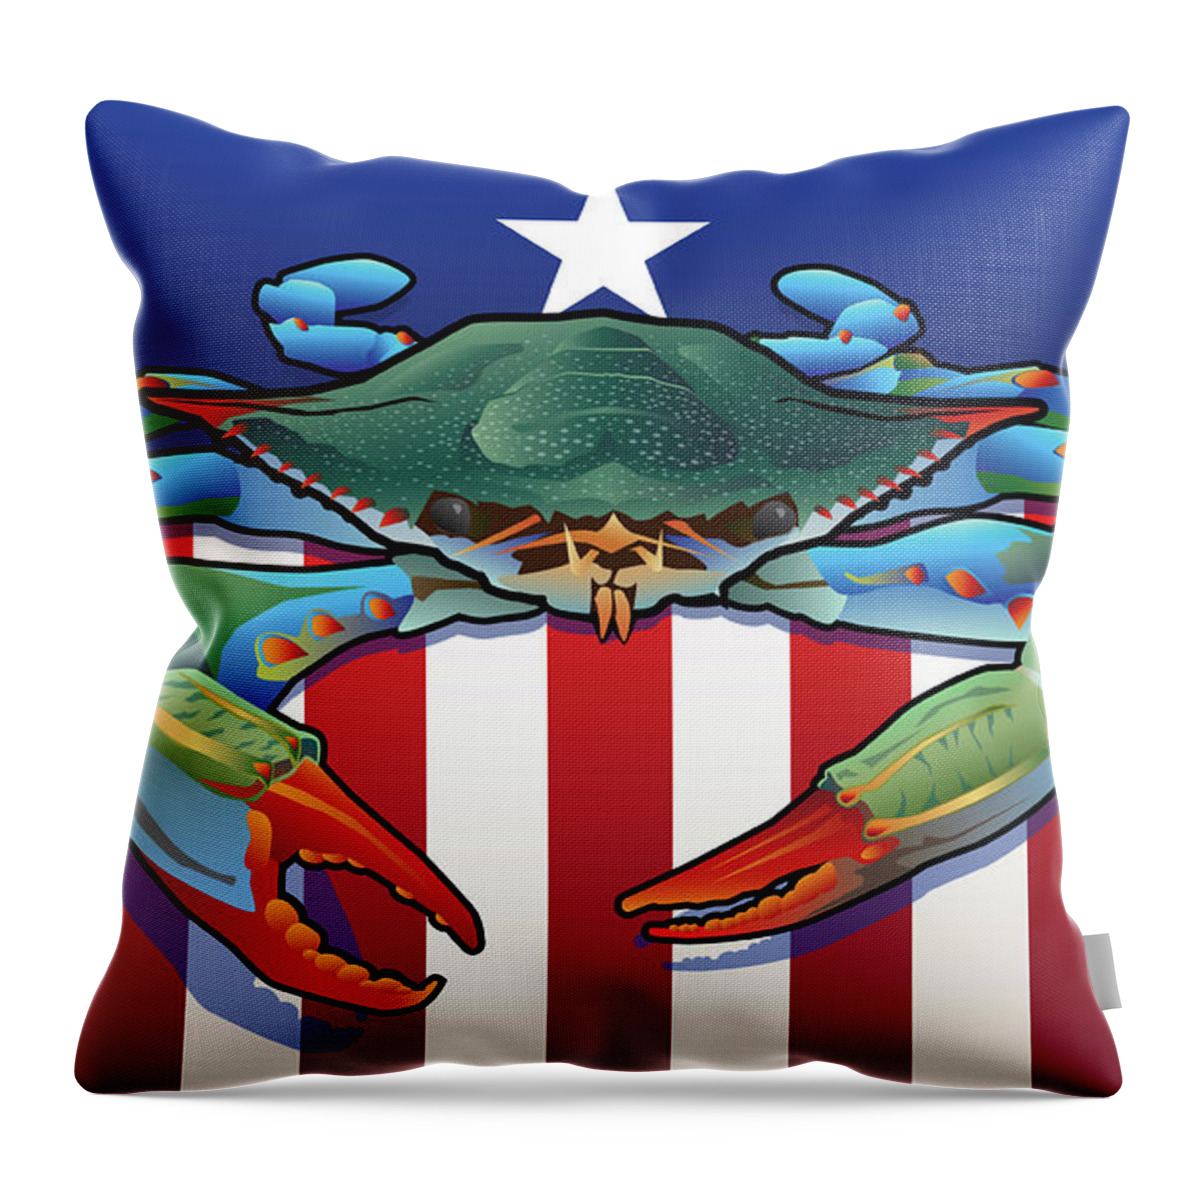 Blue Crab Throw Pillow featuring the digital art USA Blue Crab by Joe Barsin